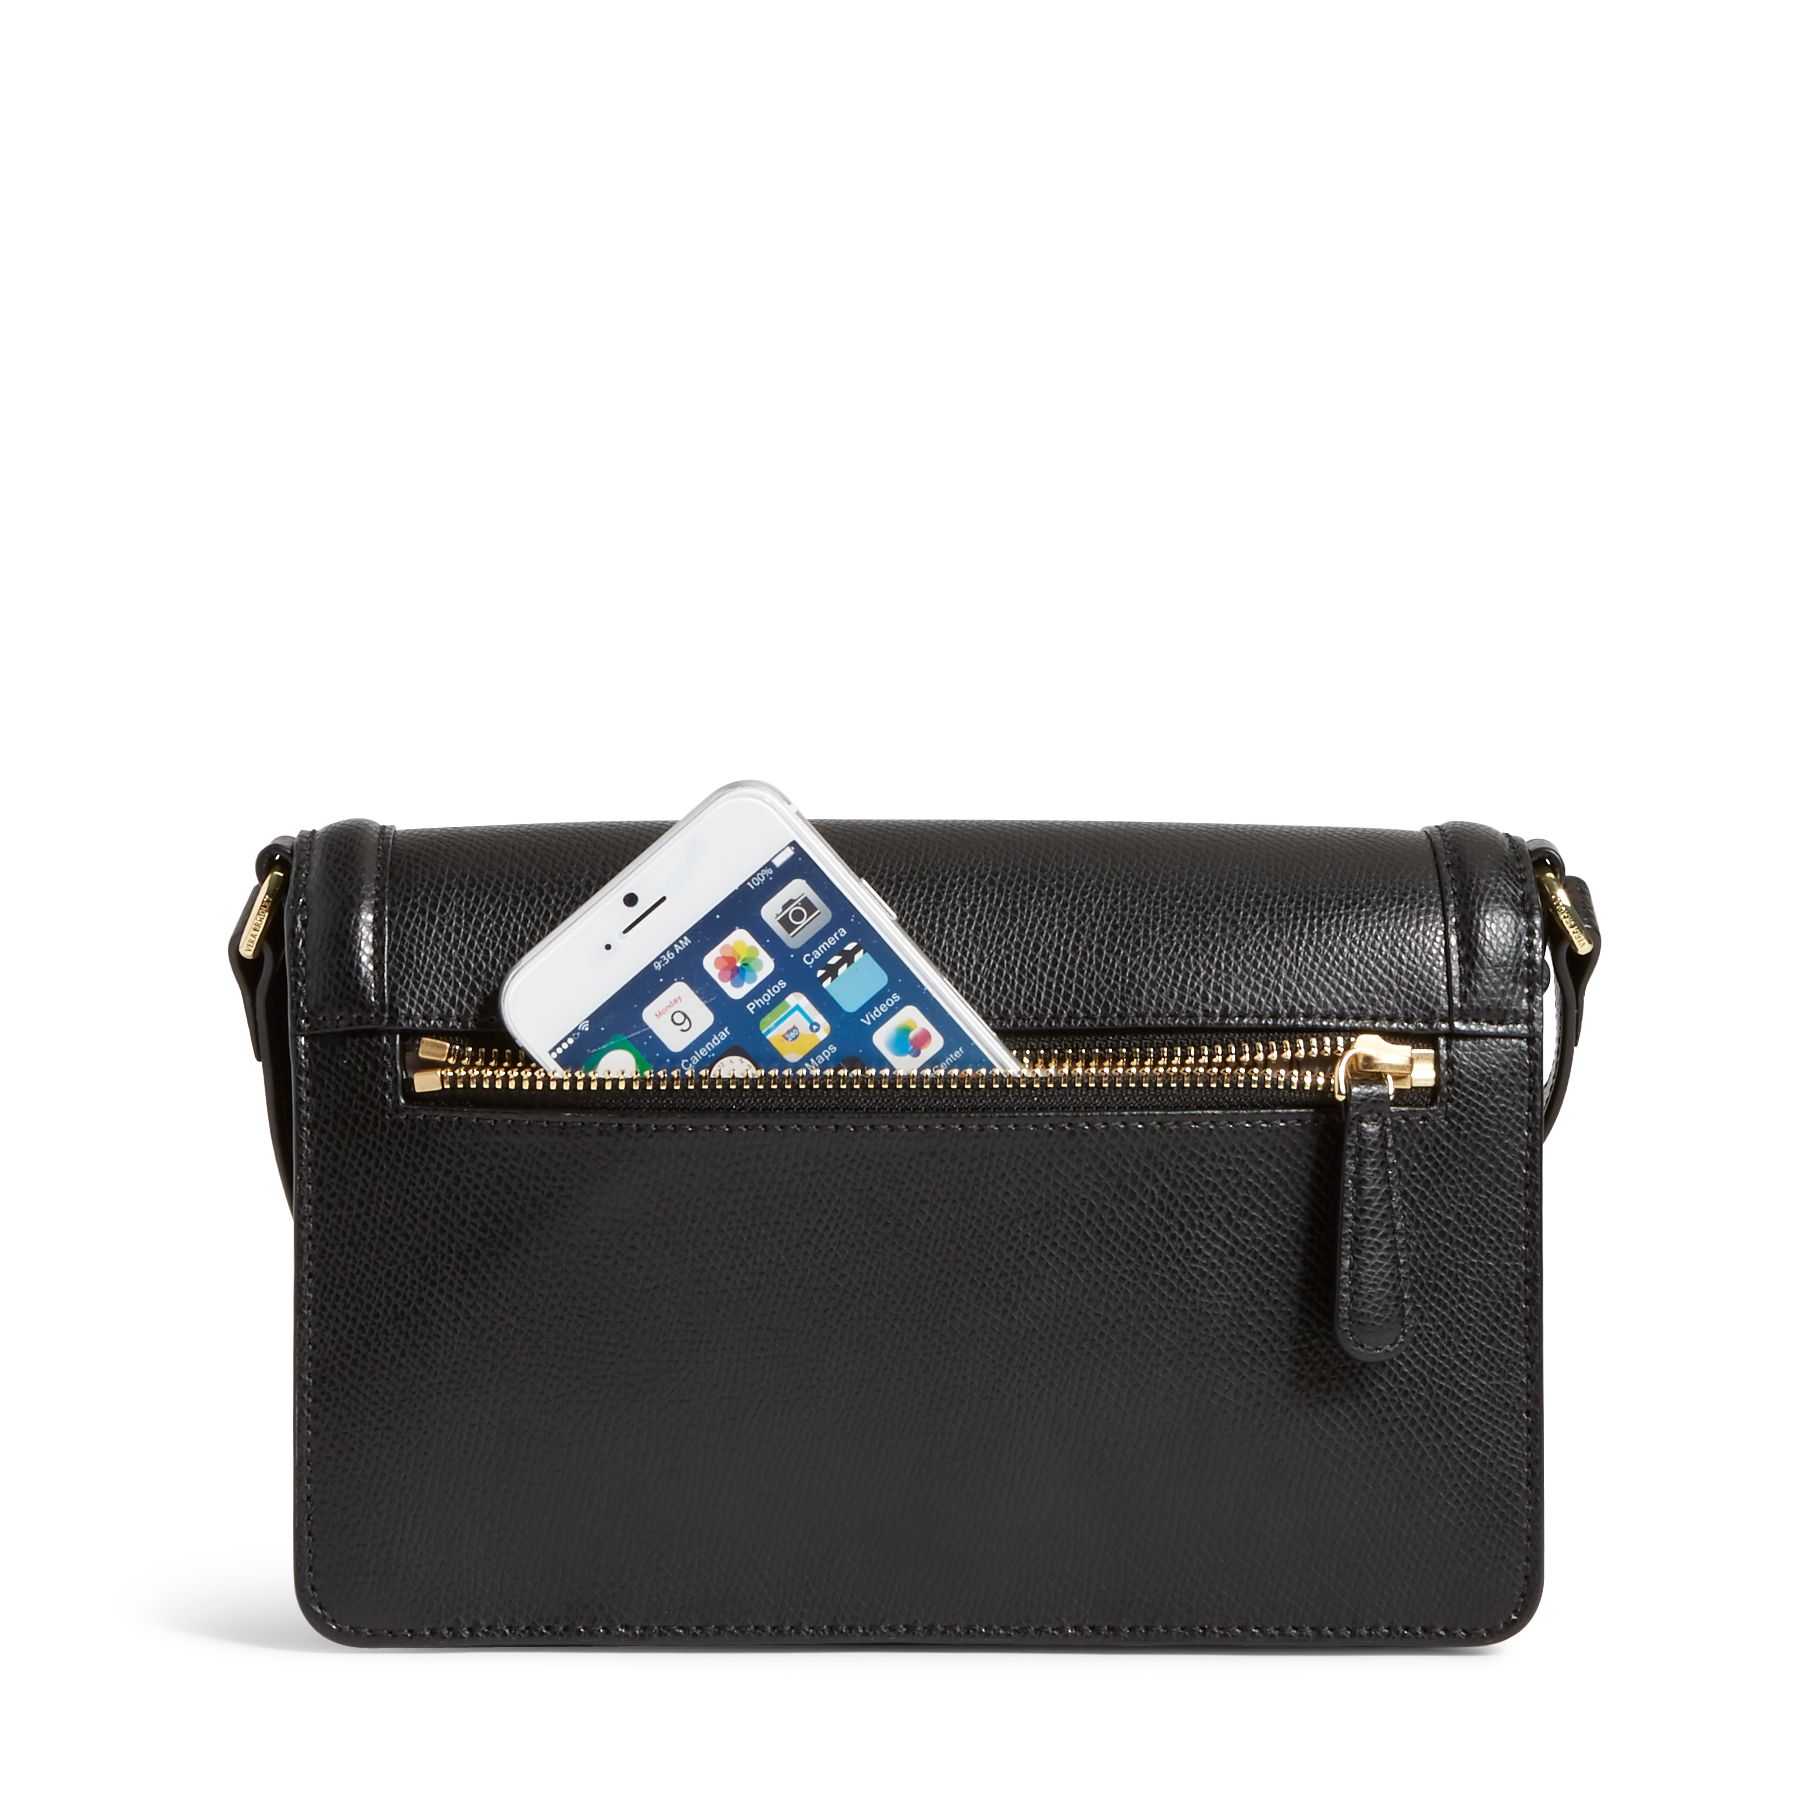 Vera Bradley Leather Tess Crossbody Bag | eBay